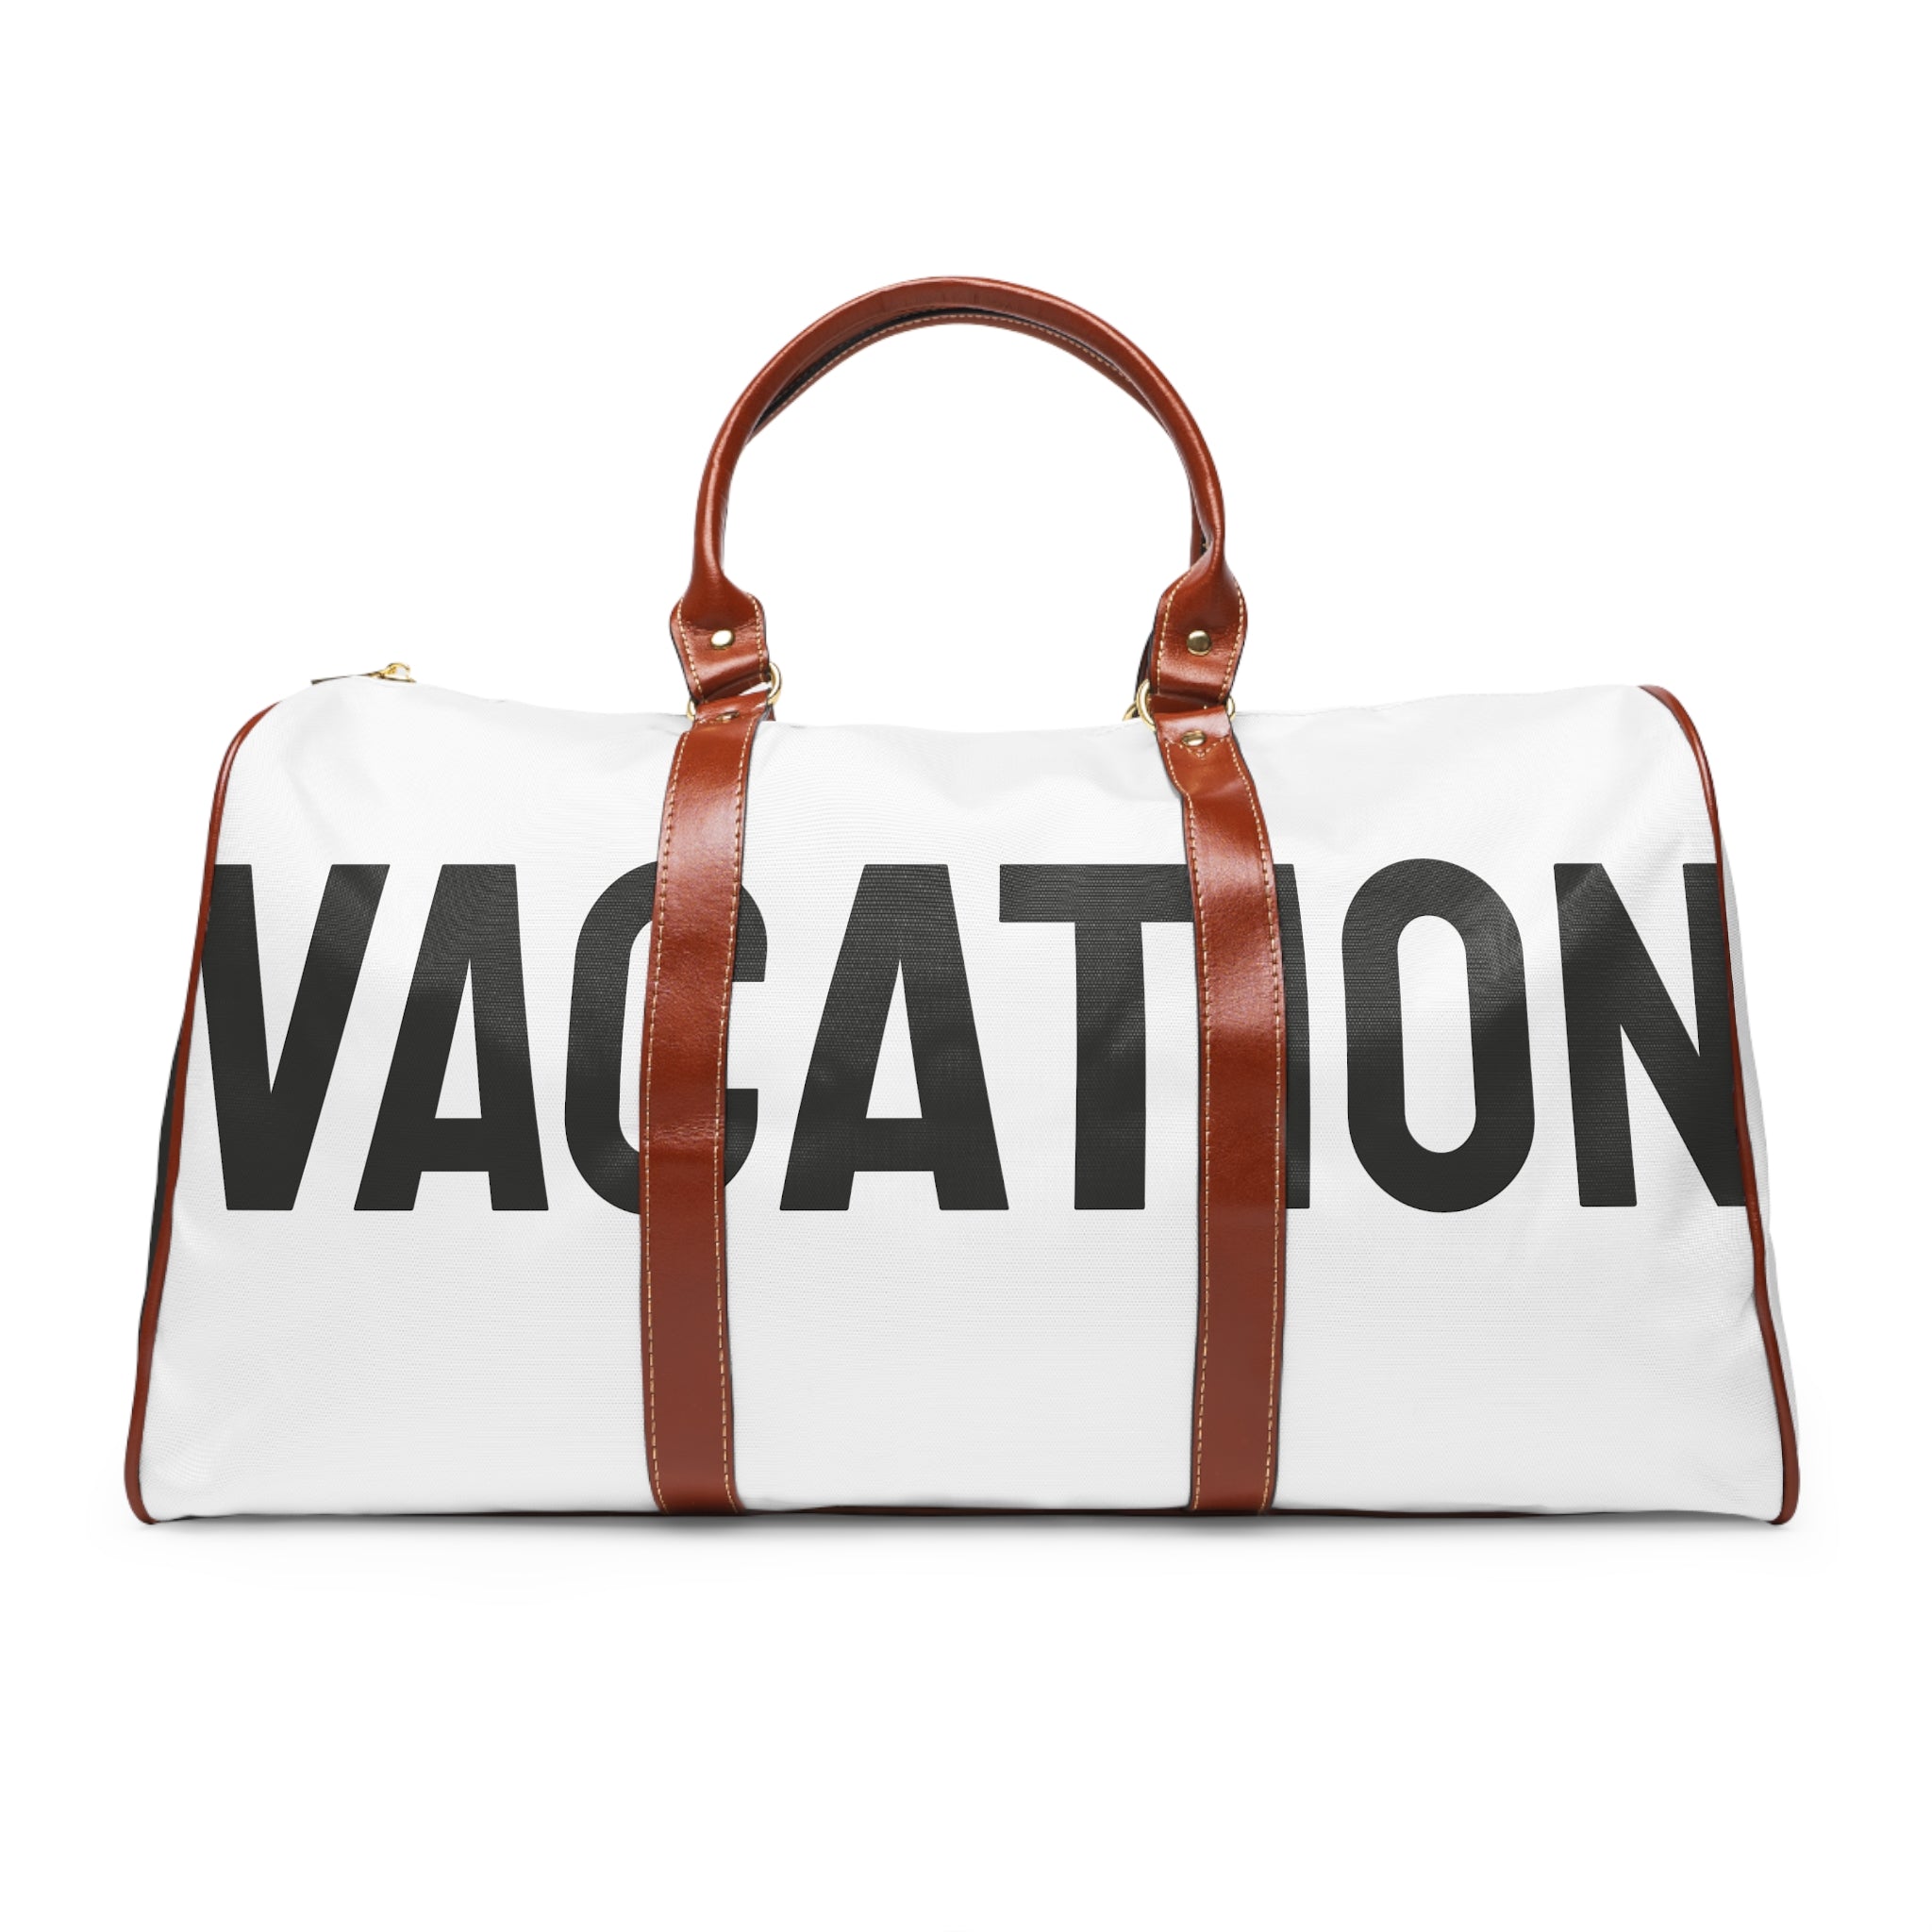 Vacation Weekender Tote (White)